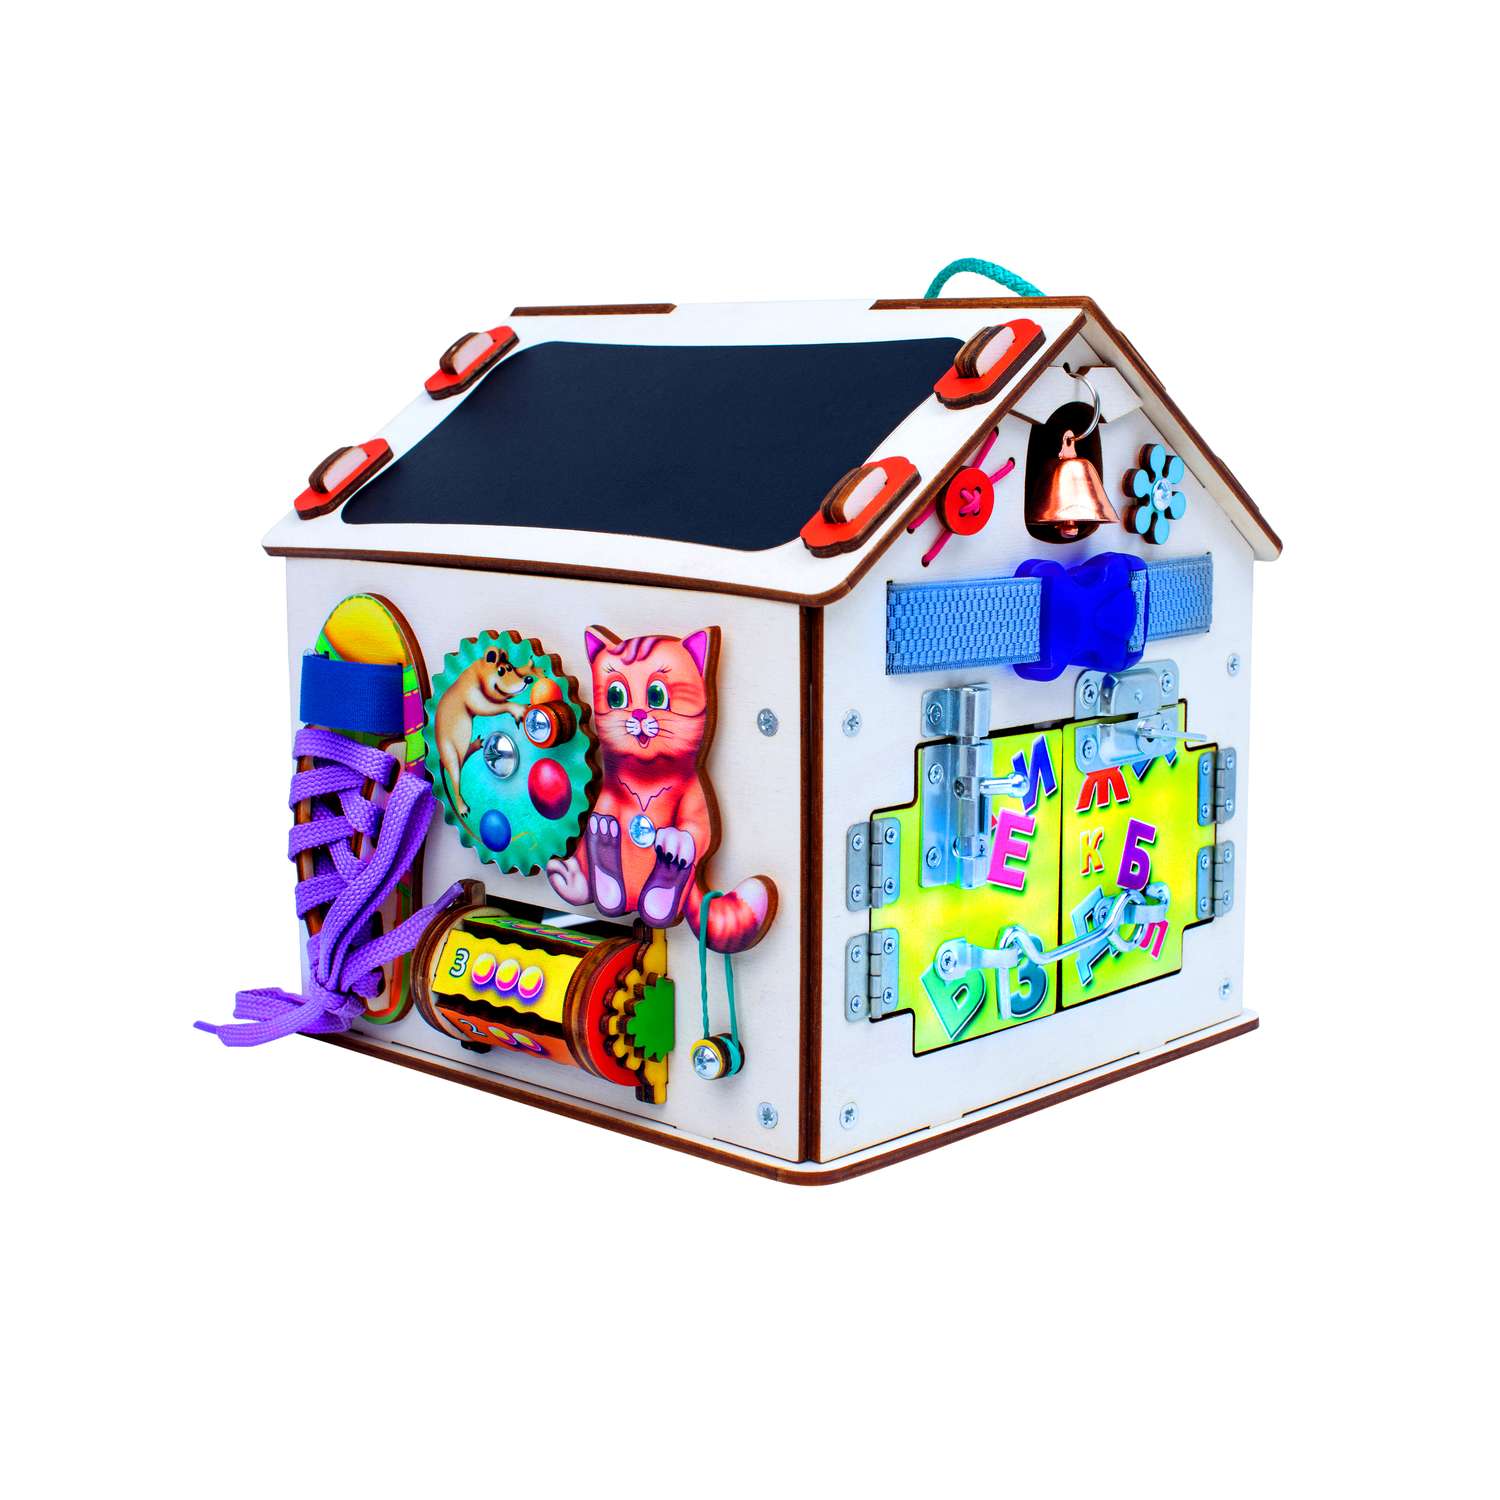 Бизиборд Jolly Kids развивающий домик со светом Котик - фото 2